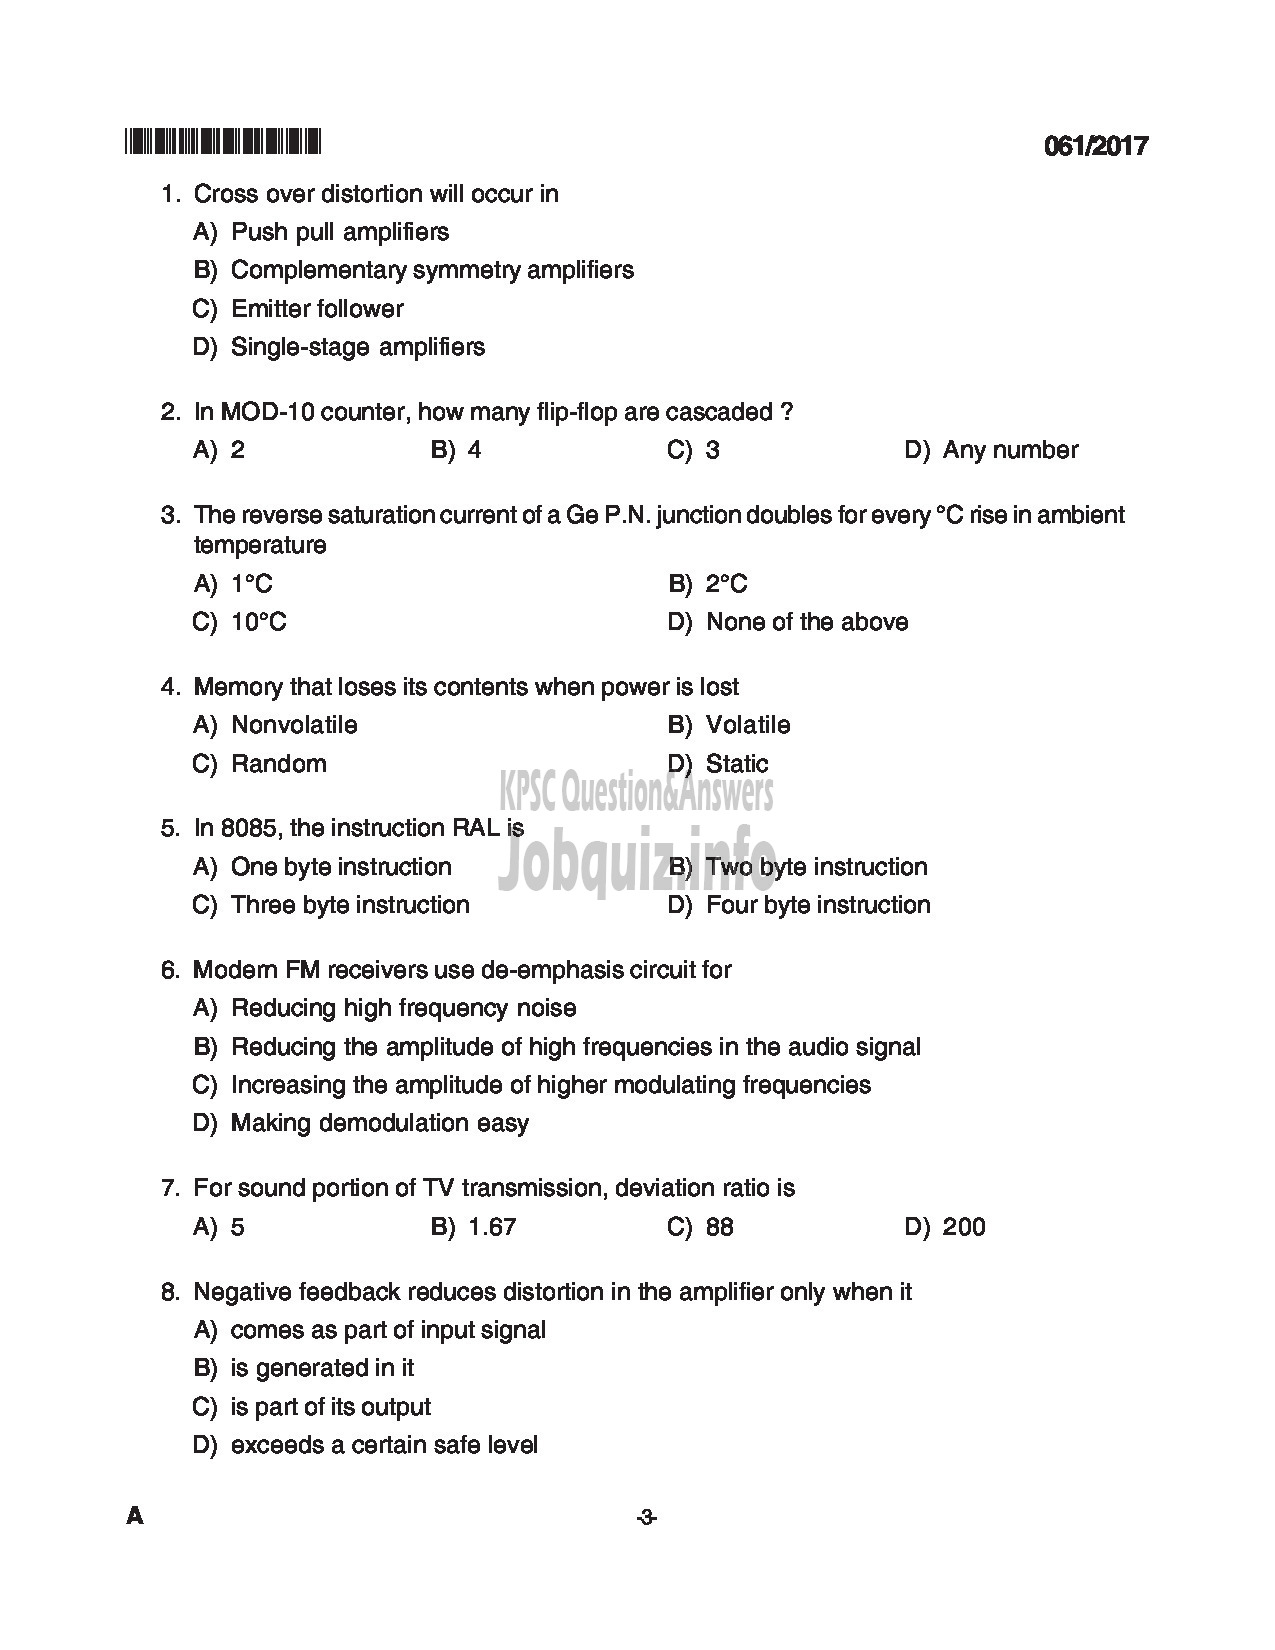 Kerala PSC Question Paper - TRADESMAN ELECTRONICS TECHNICAL EDUCATION QUESTION PAPER-3